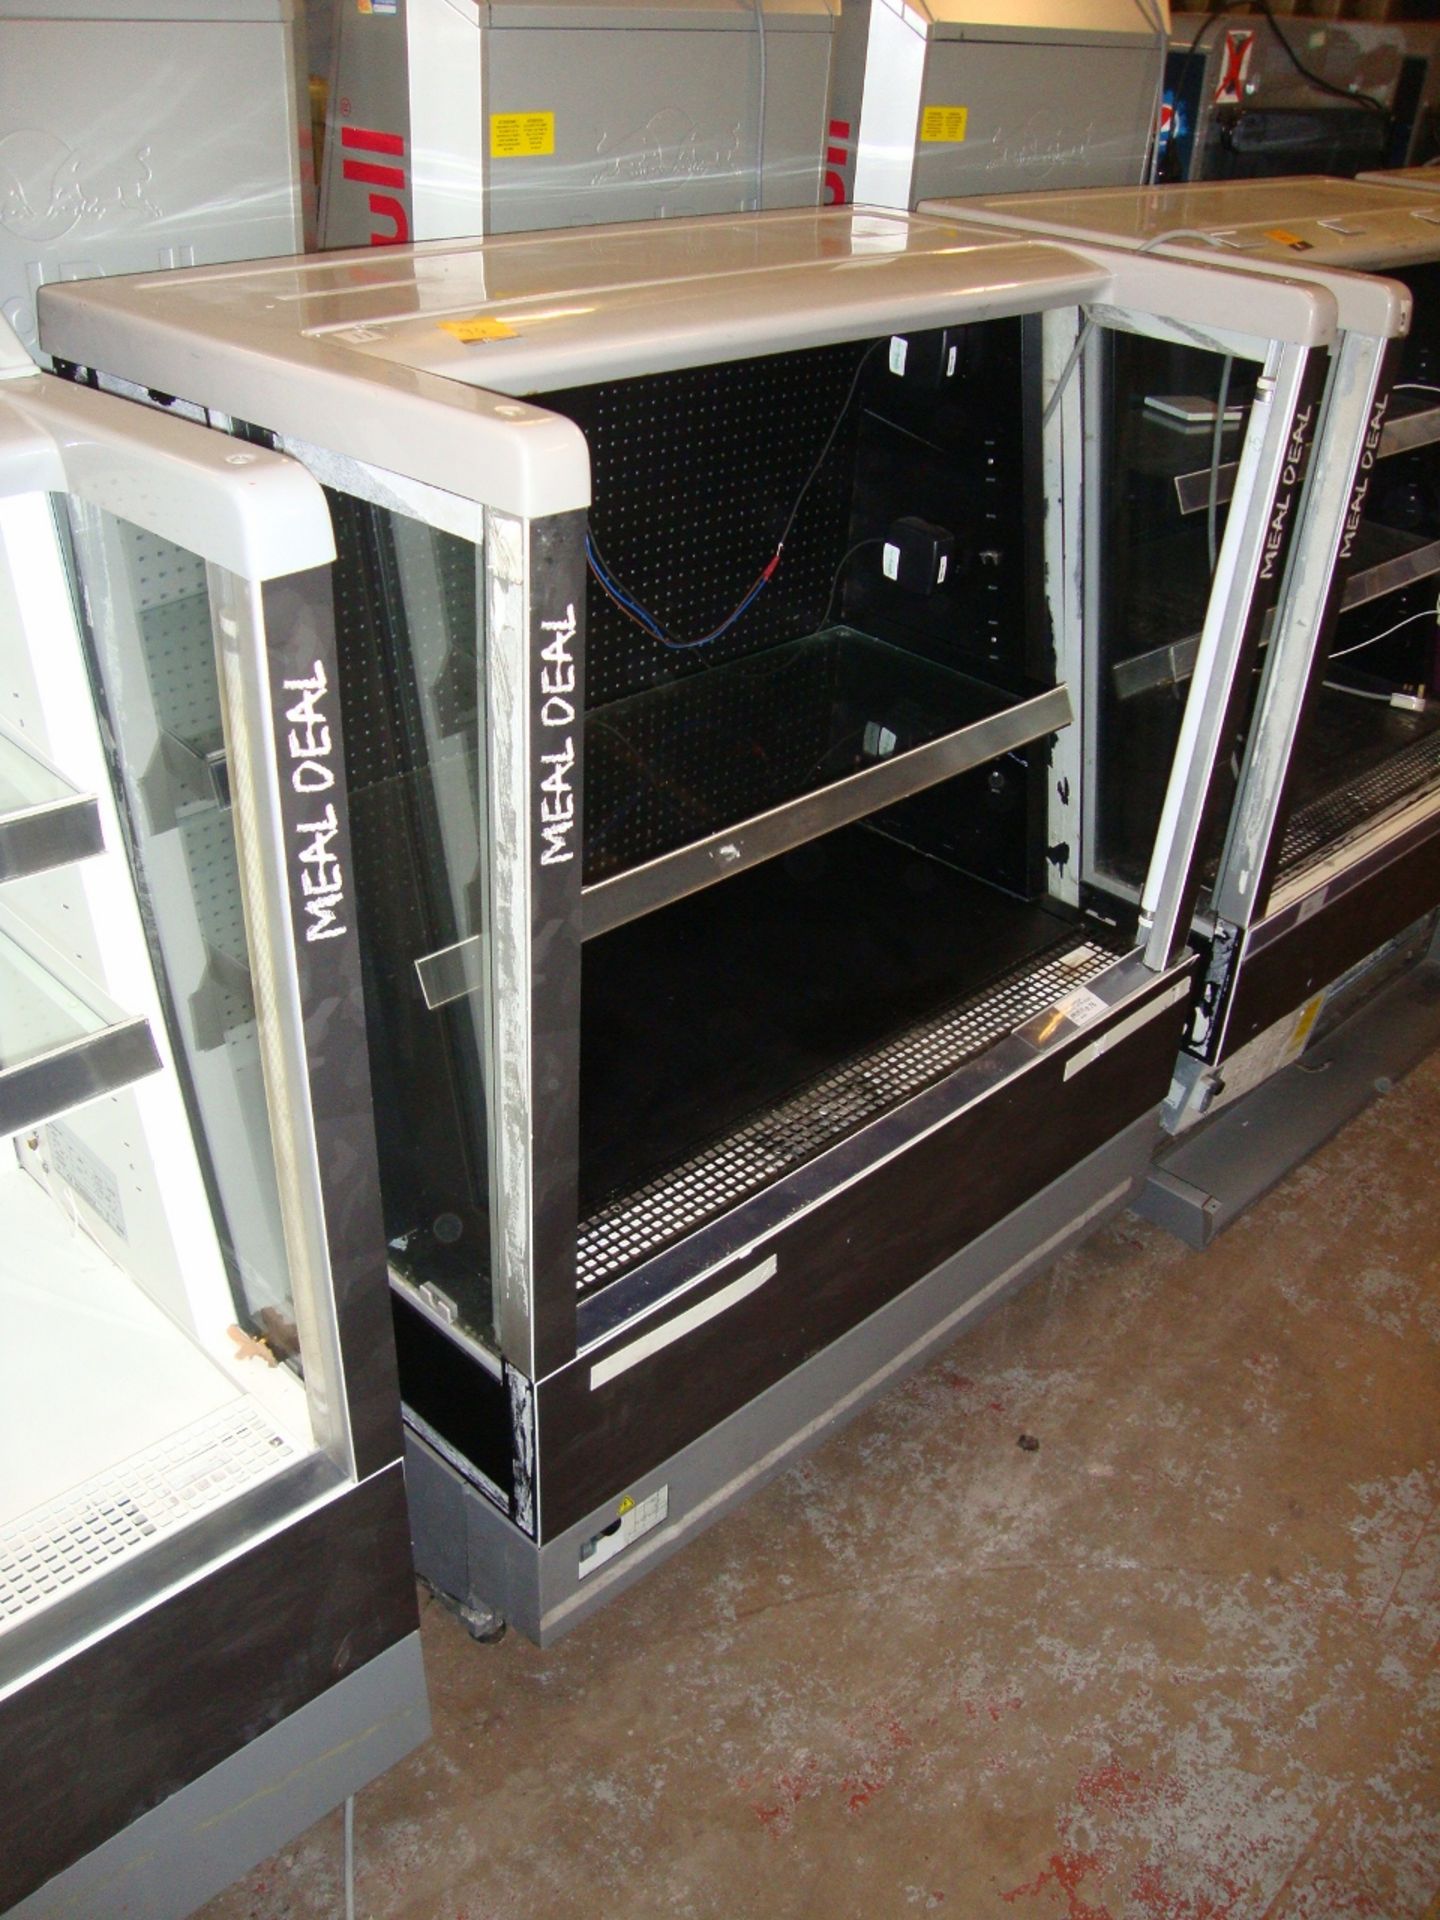 Carrier Presenter 1045 open front display chiller/fridge